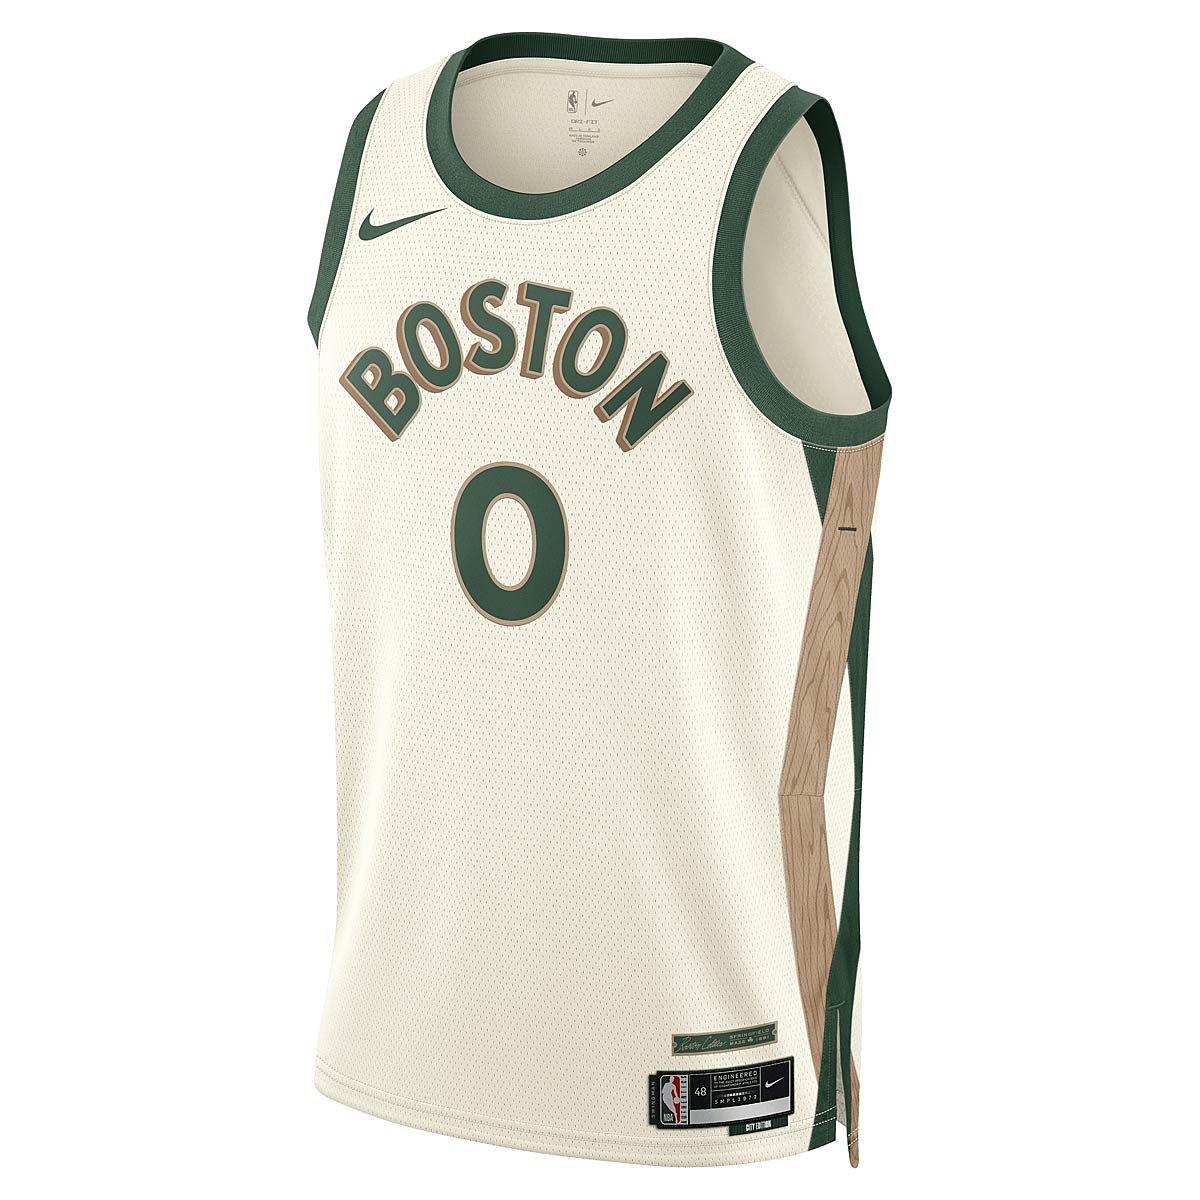 Image of Nike NBA Boston Celtics Dri-fit City Edition Swingman Jersey Jayson Tatum, Sail/stealth-white